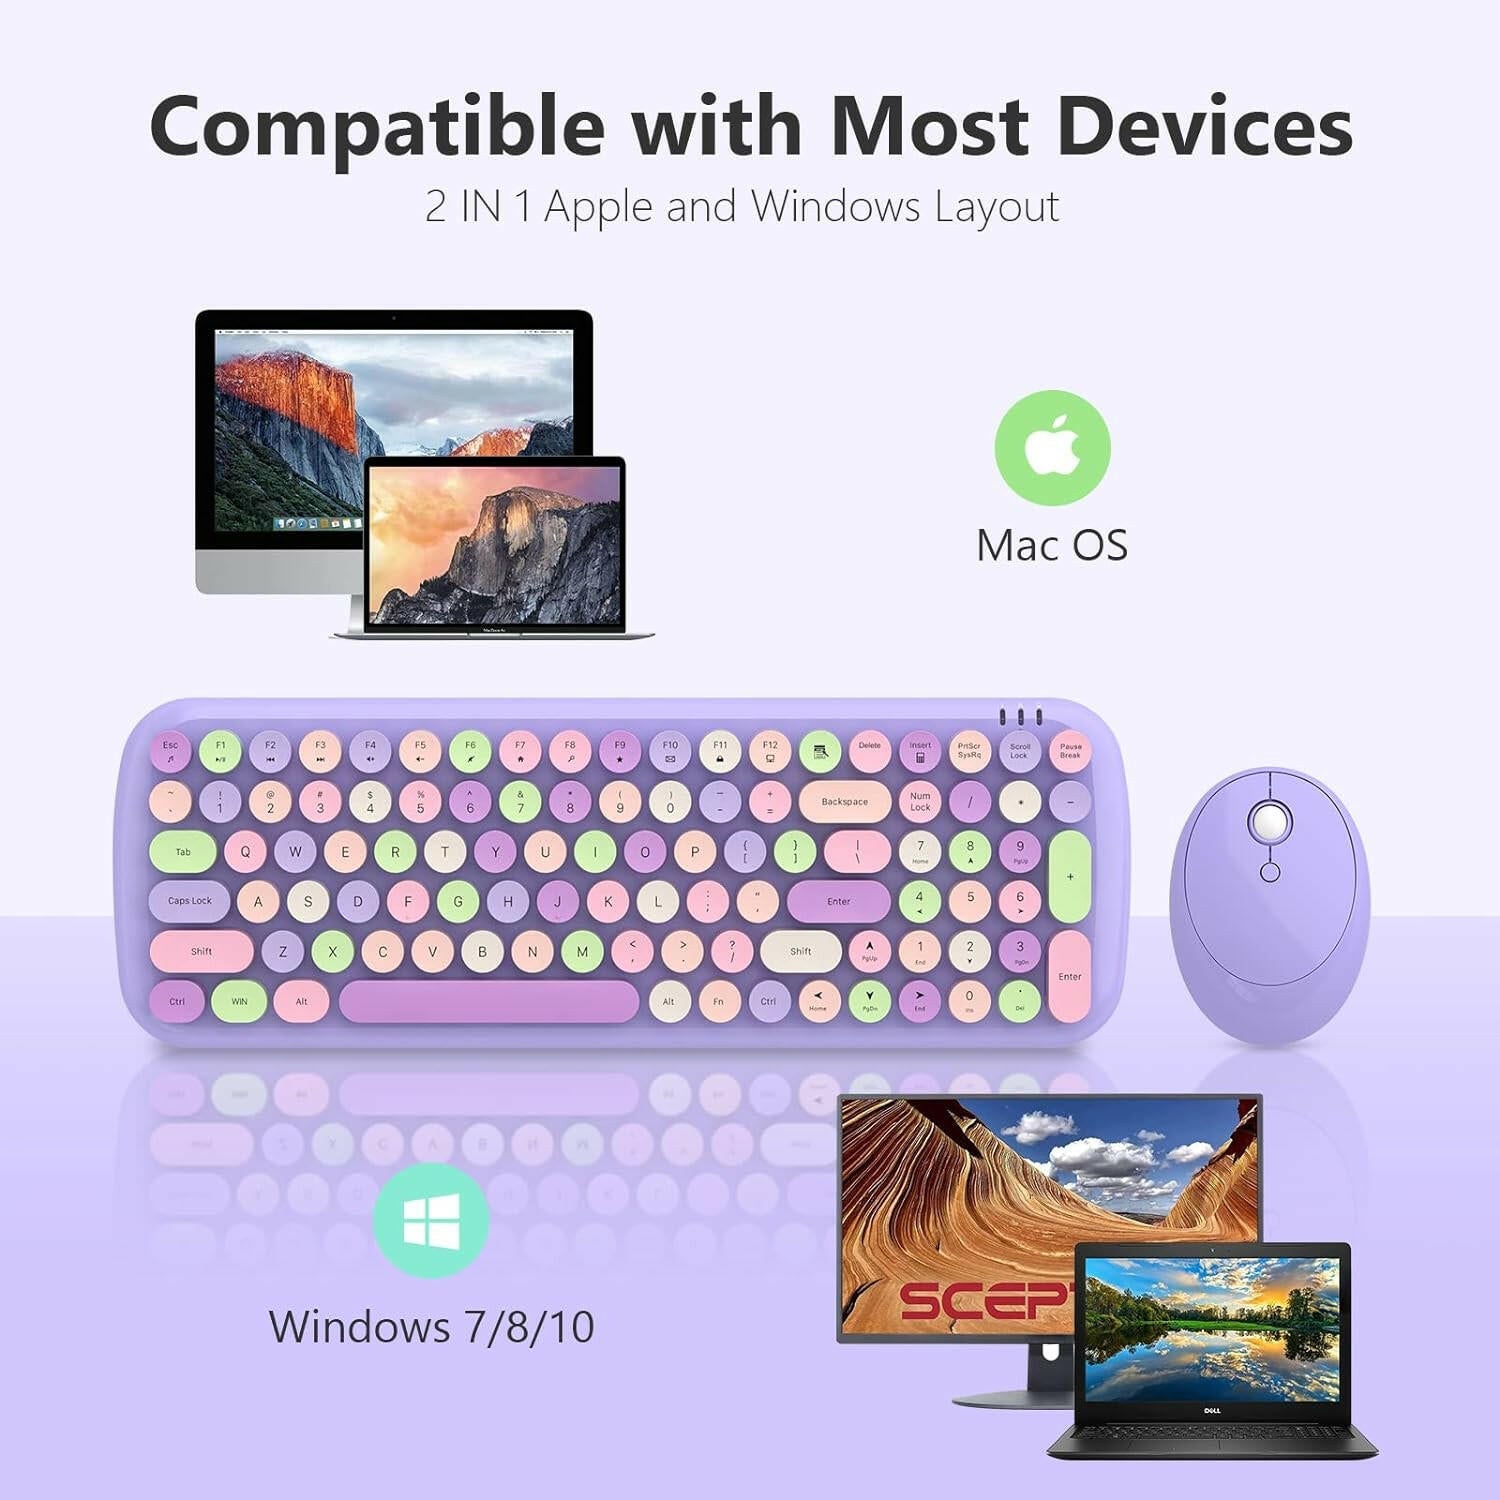 MOFII Wireless Keyboard and Mouse - Purple - TapElf